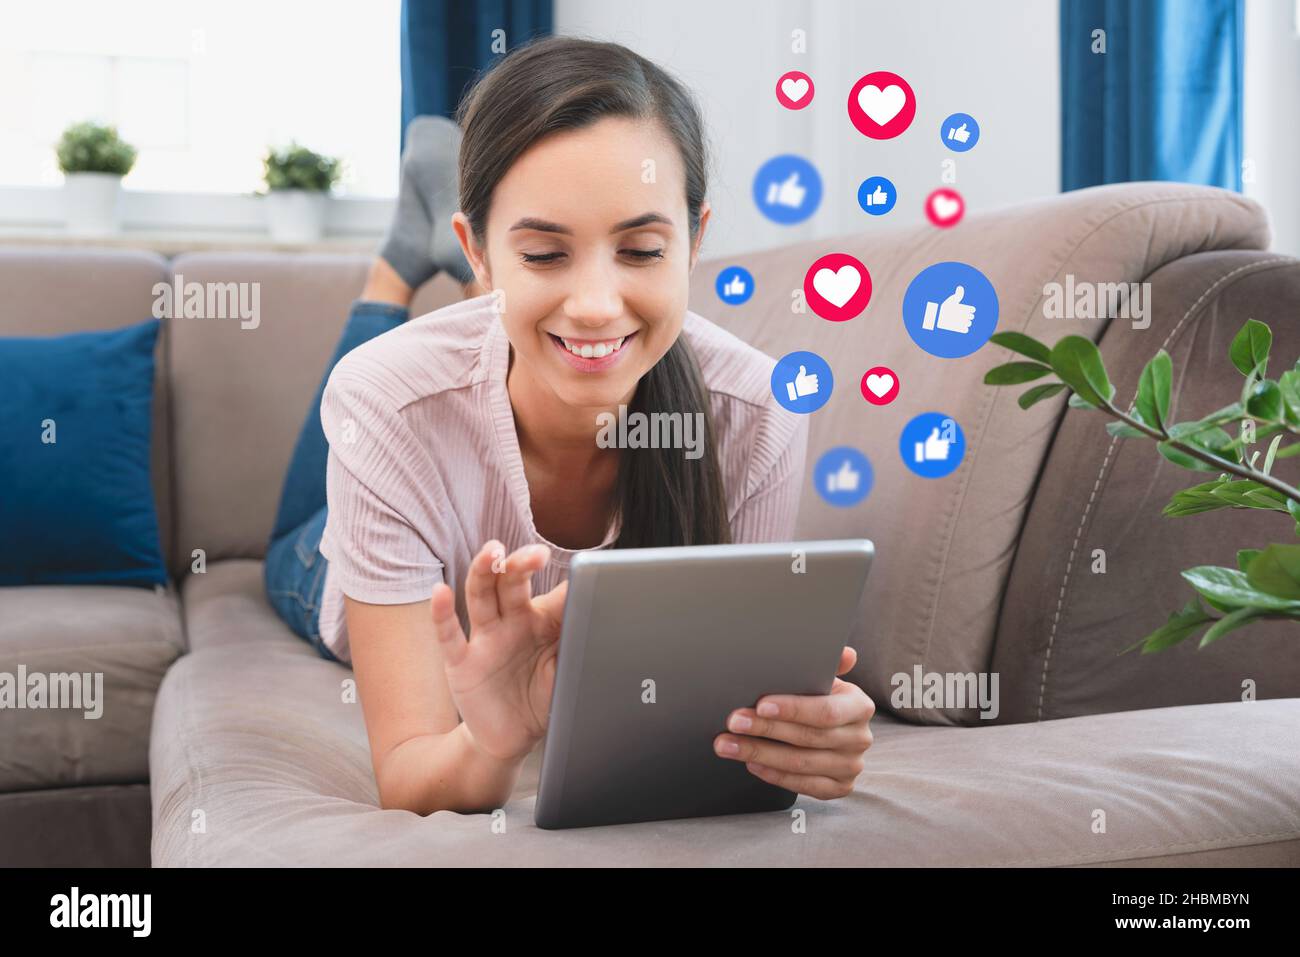 Giovane donna che usa i social media. Icone che volano dal tablet digitale Foto Stock